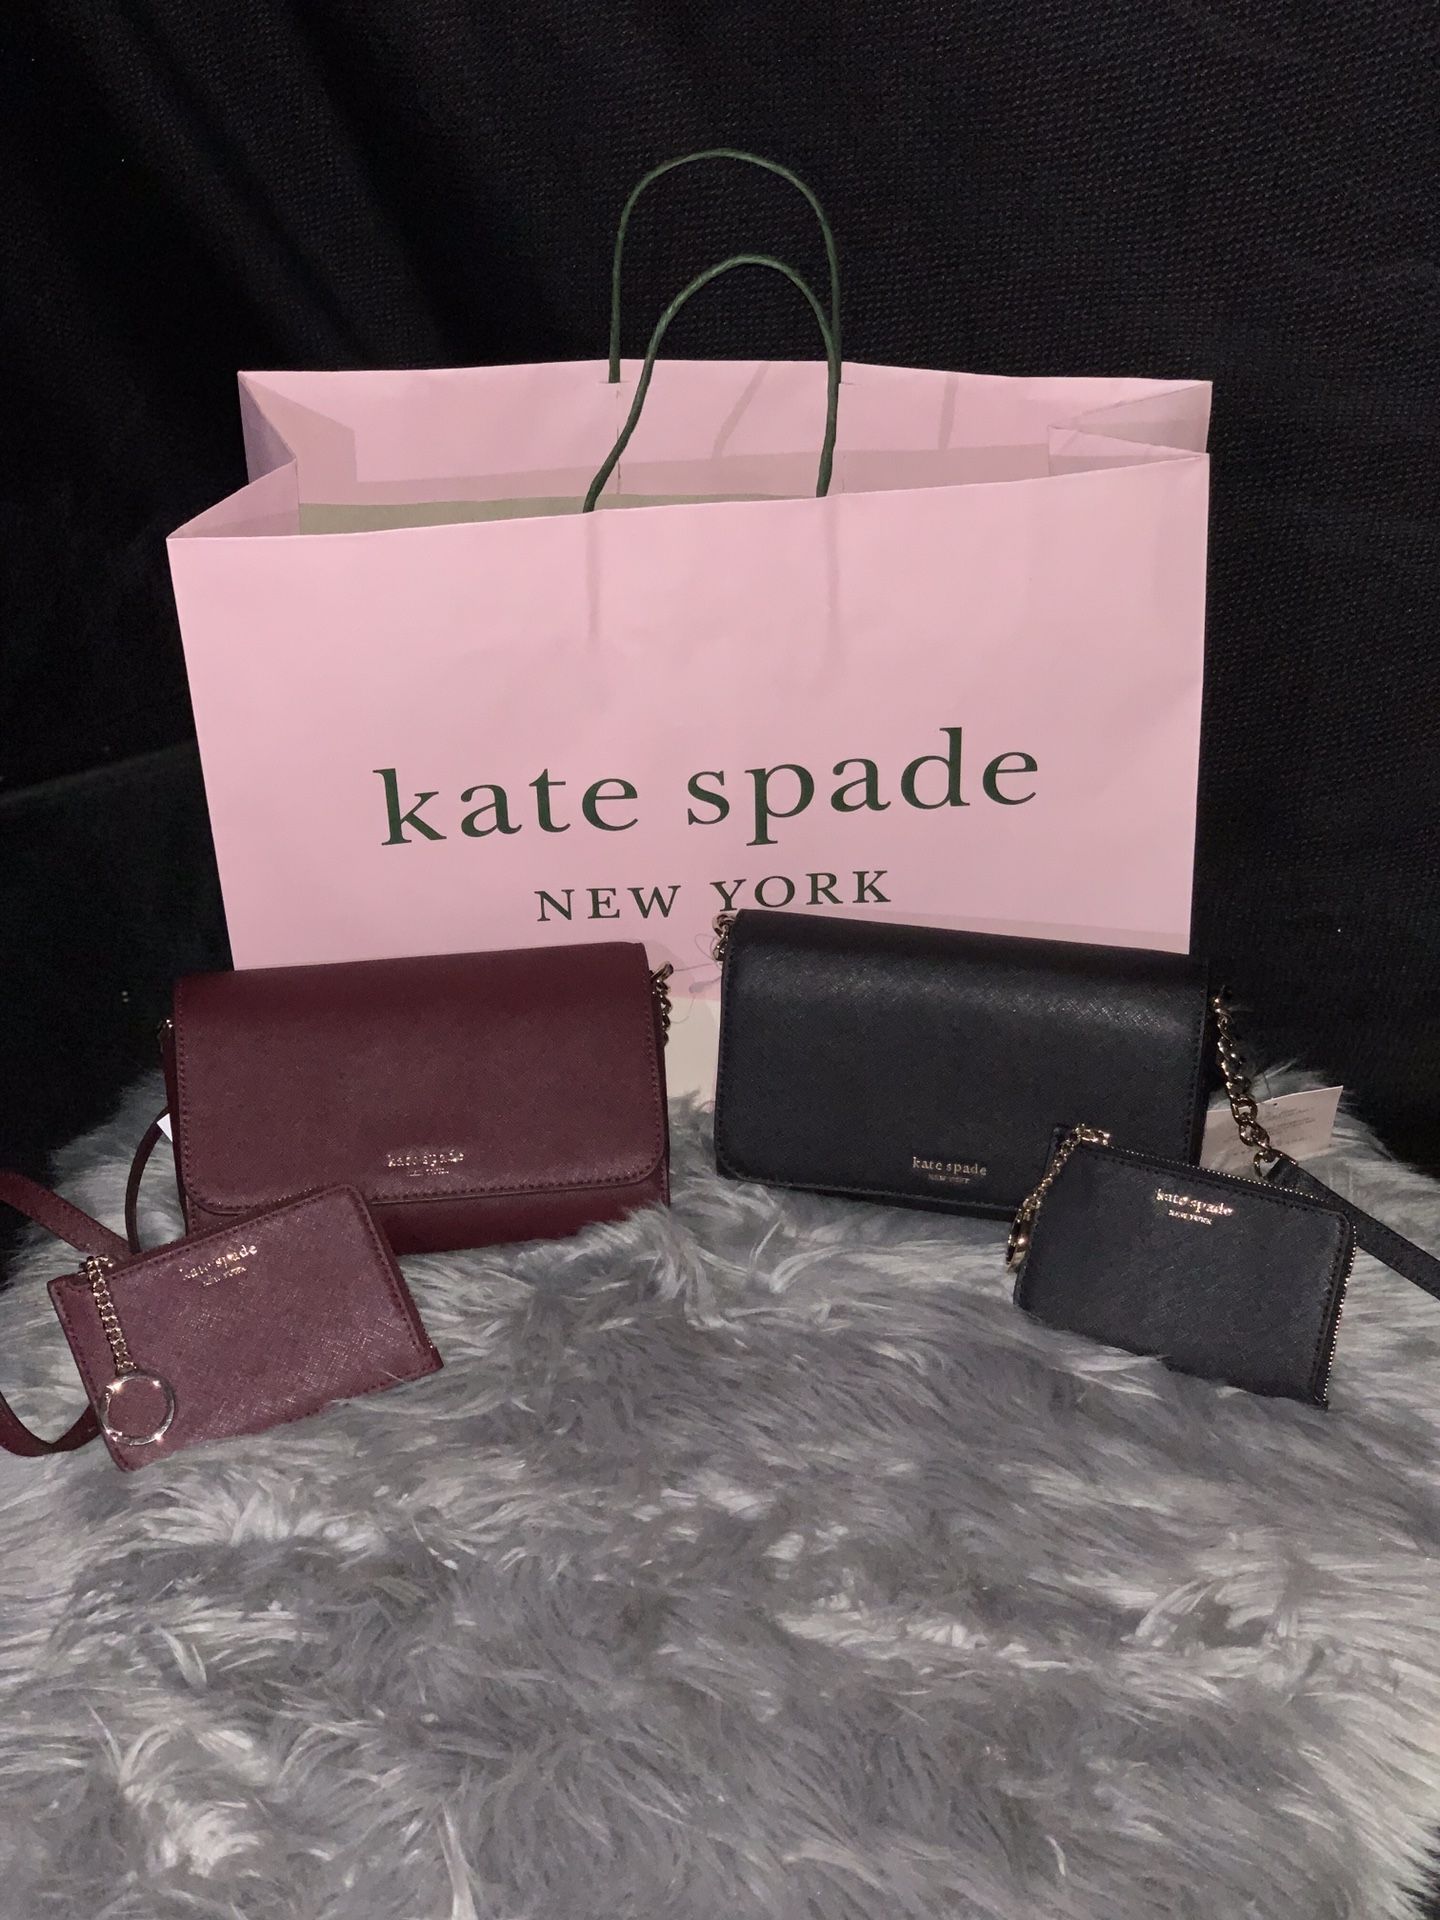 Kate spade crossbody purse with matching coin purse. Original